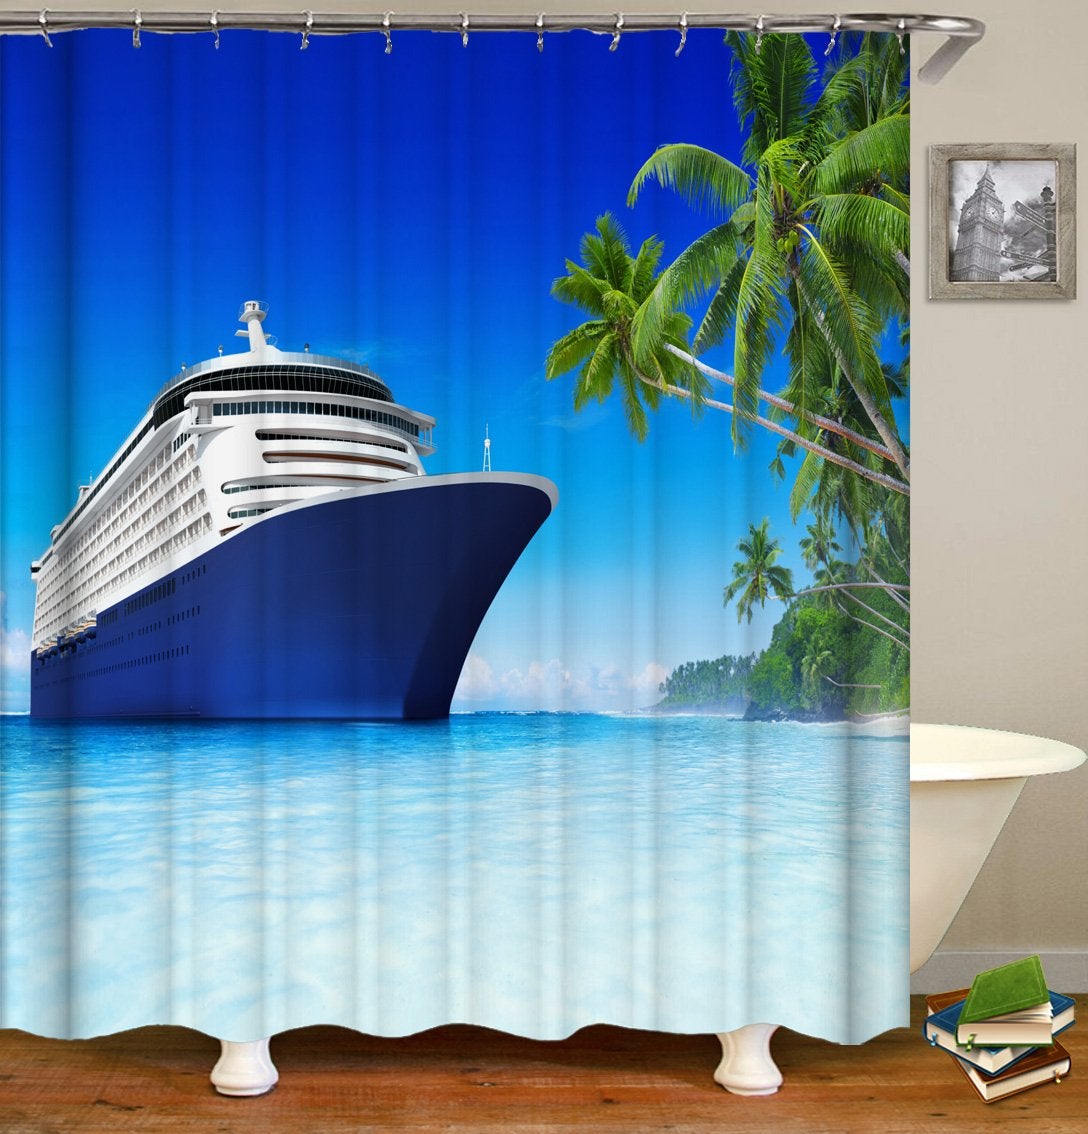 Tropical Pleasure Cruise Shower Curtain